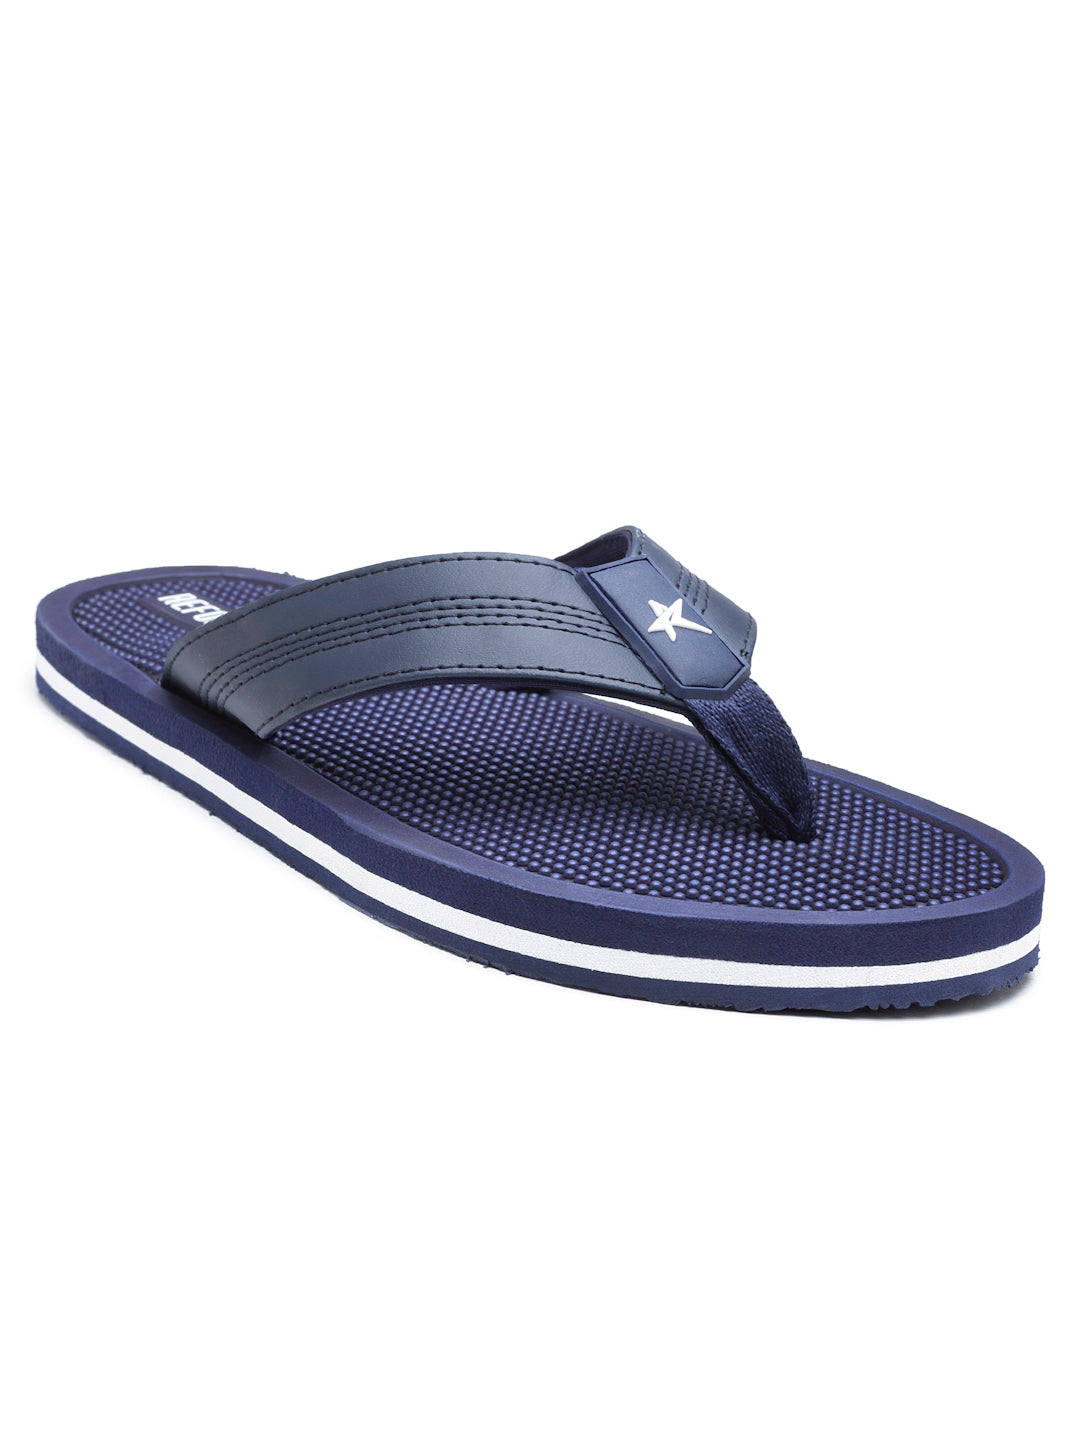 Blue Solid EVA Rubber Slip On Casual Slippers For Men